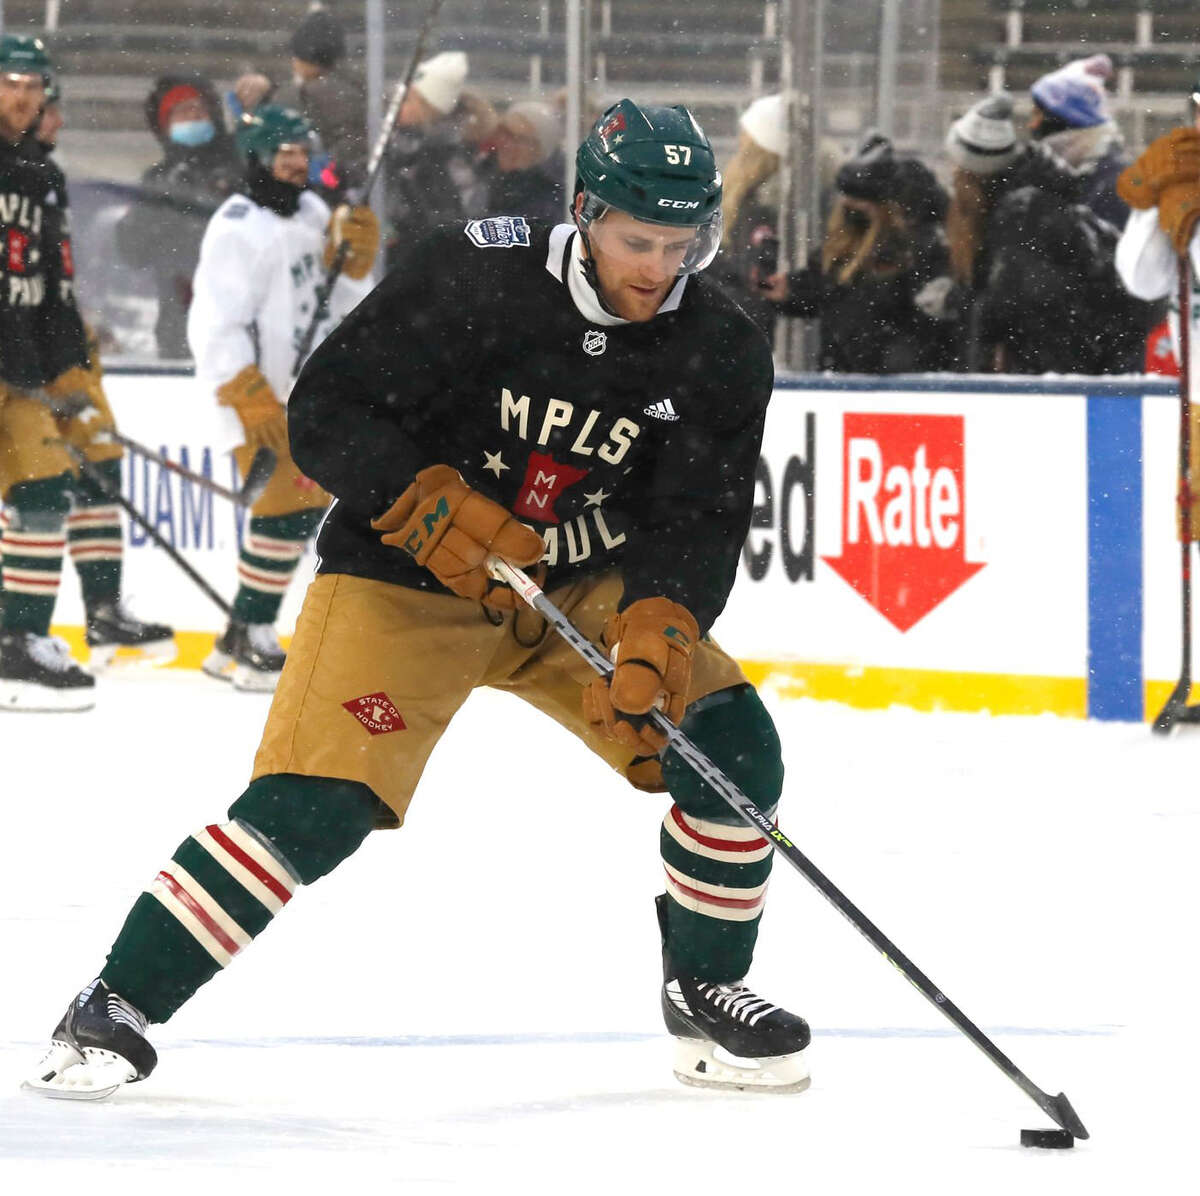 Alton native Dakota Mermis took part in the NHL Winter Warmup New Year's Day at Target Field in Minneapolis.